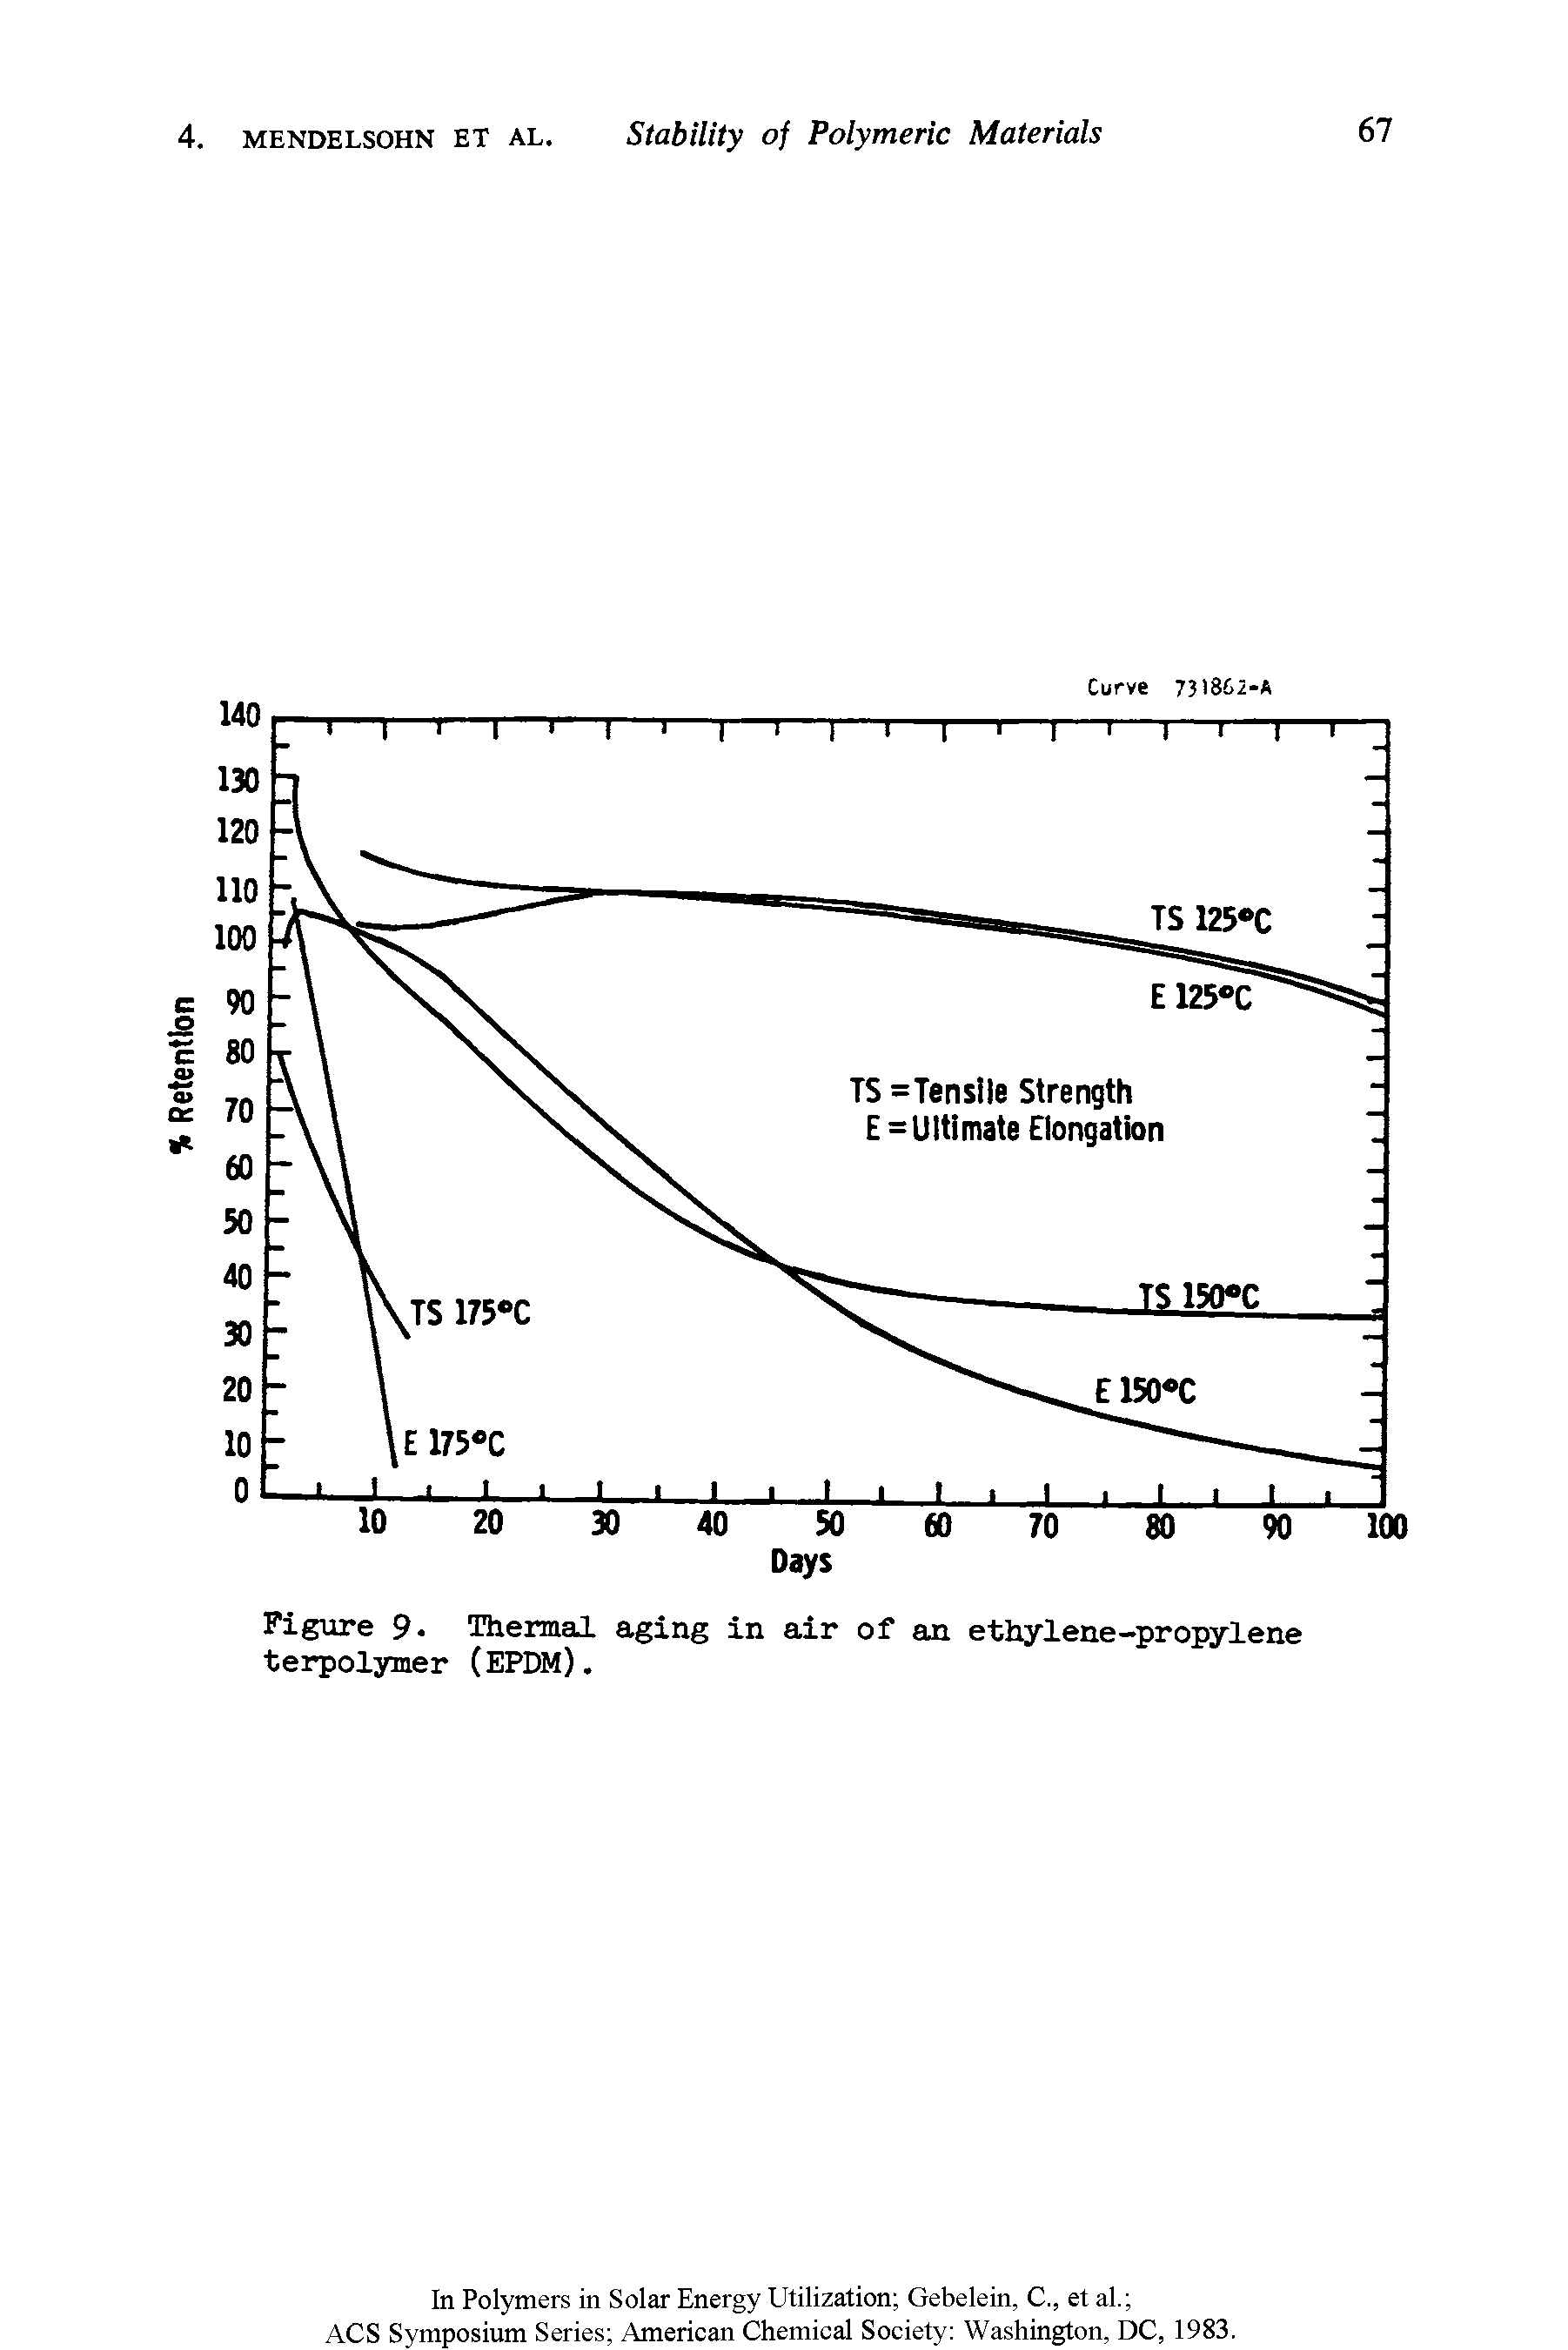 Figure 9- Thermal aging in air of an ethylene-propylene terpolymer (EPDM).